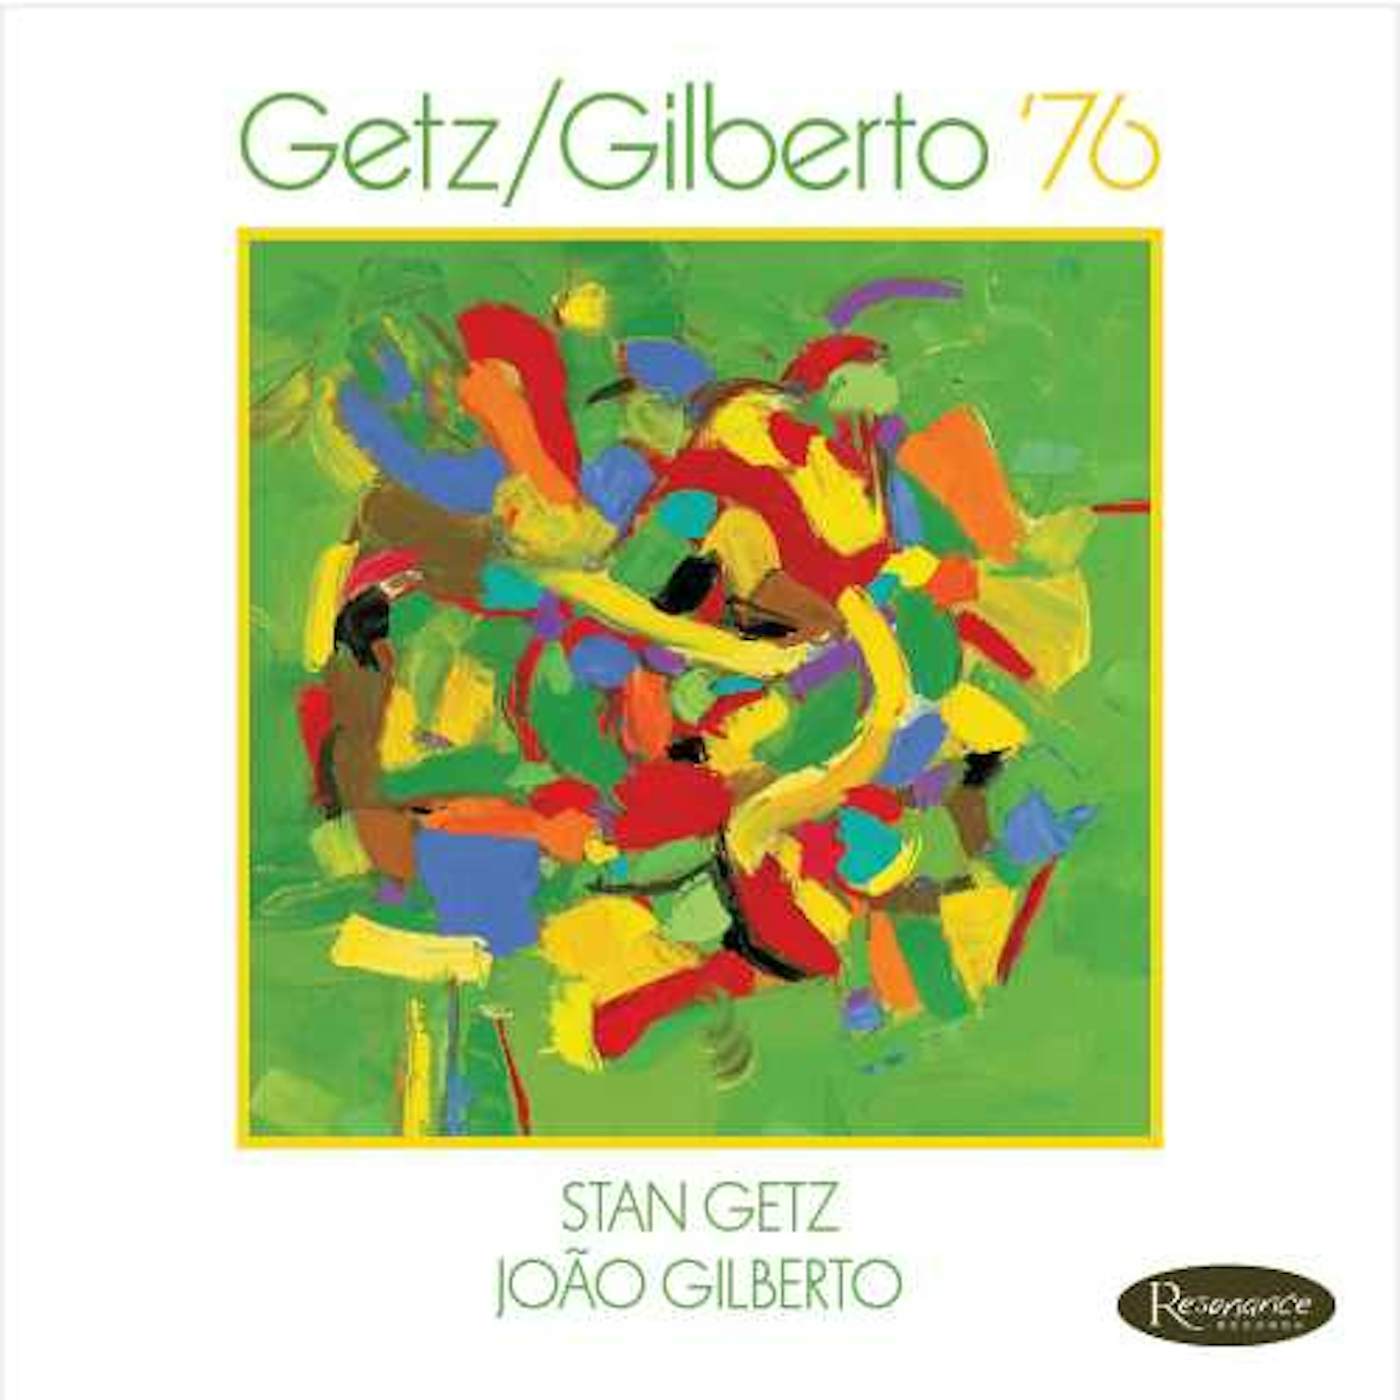 Stan Getz & Joao Gilberto GETZ/GILBERTO 76 Vinyl Record - Gatefold Sleeve